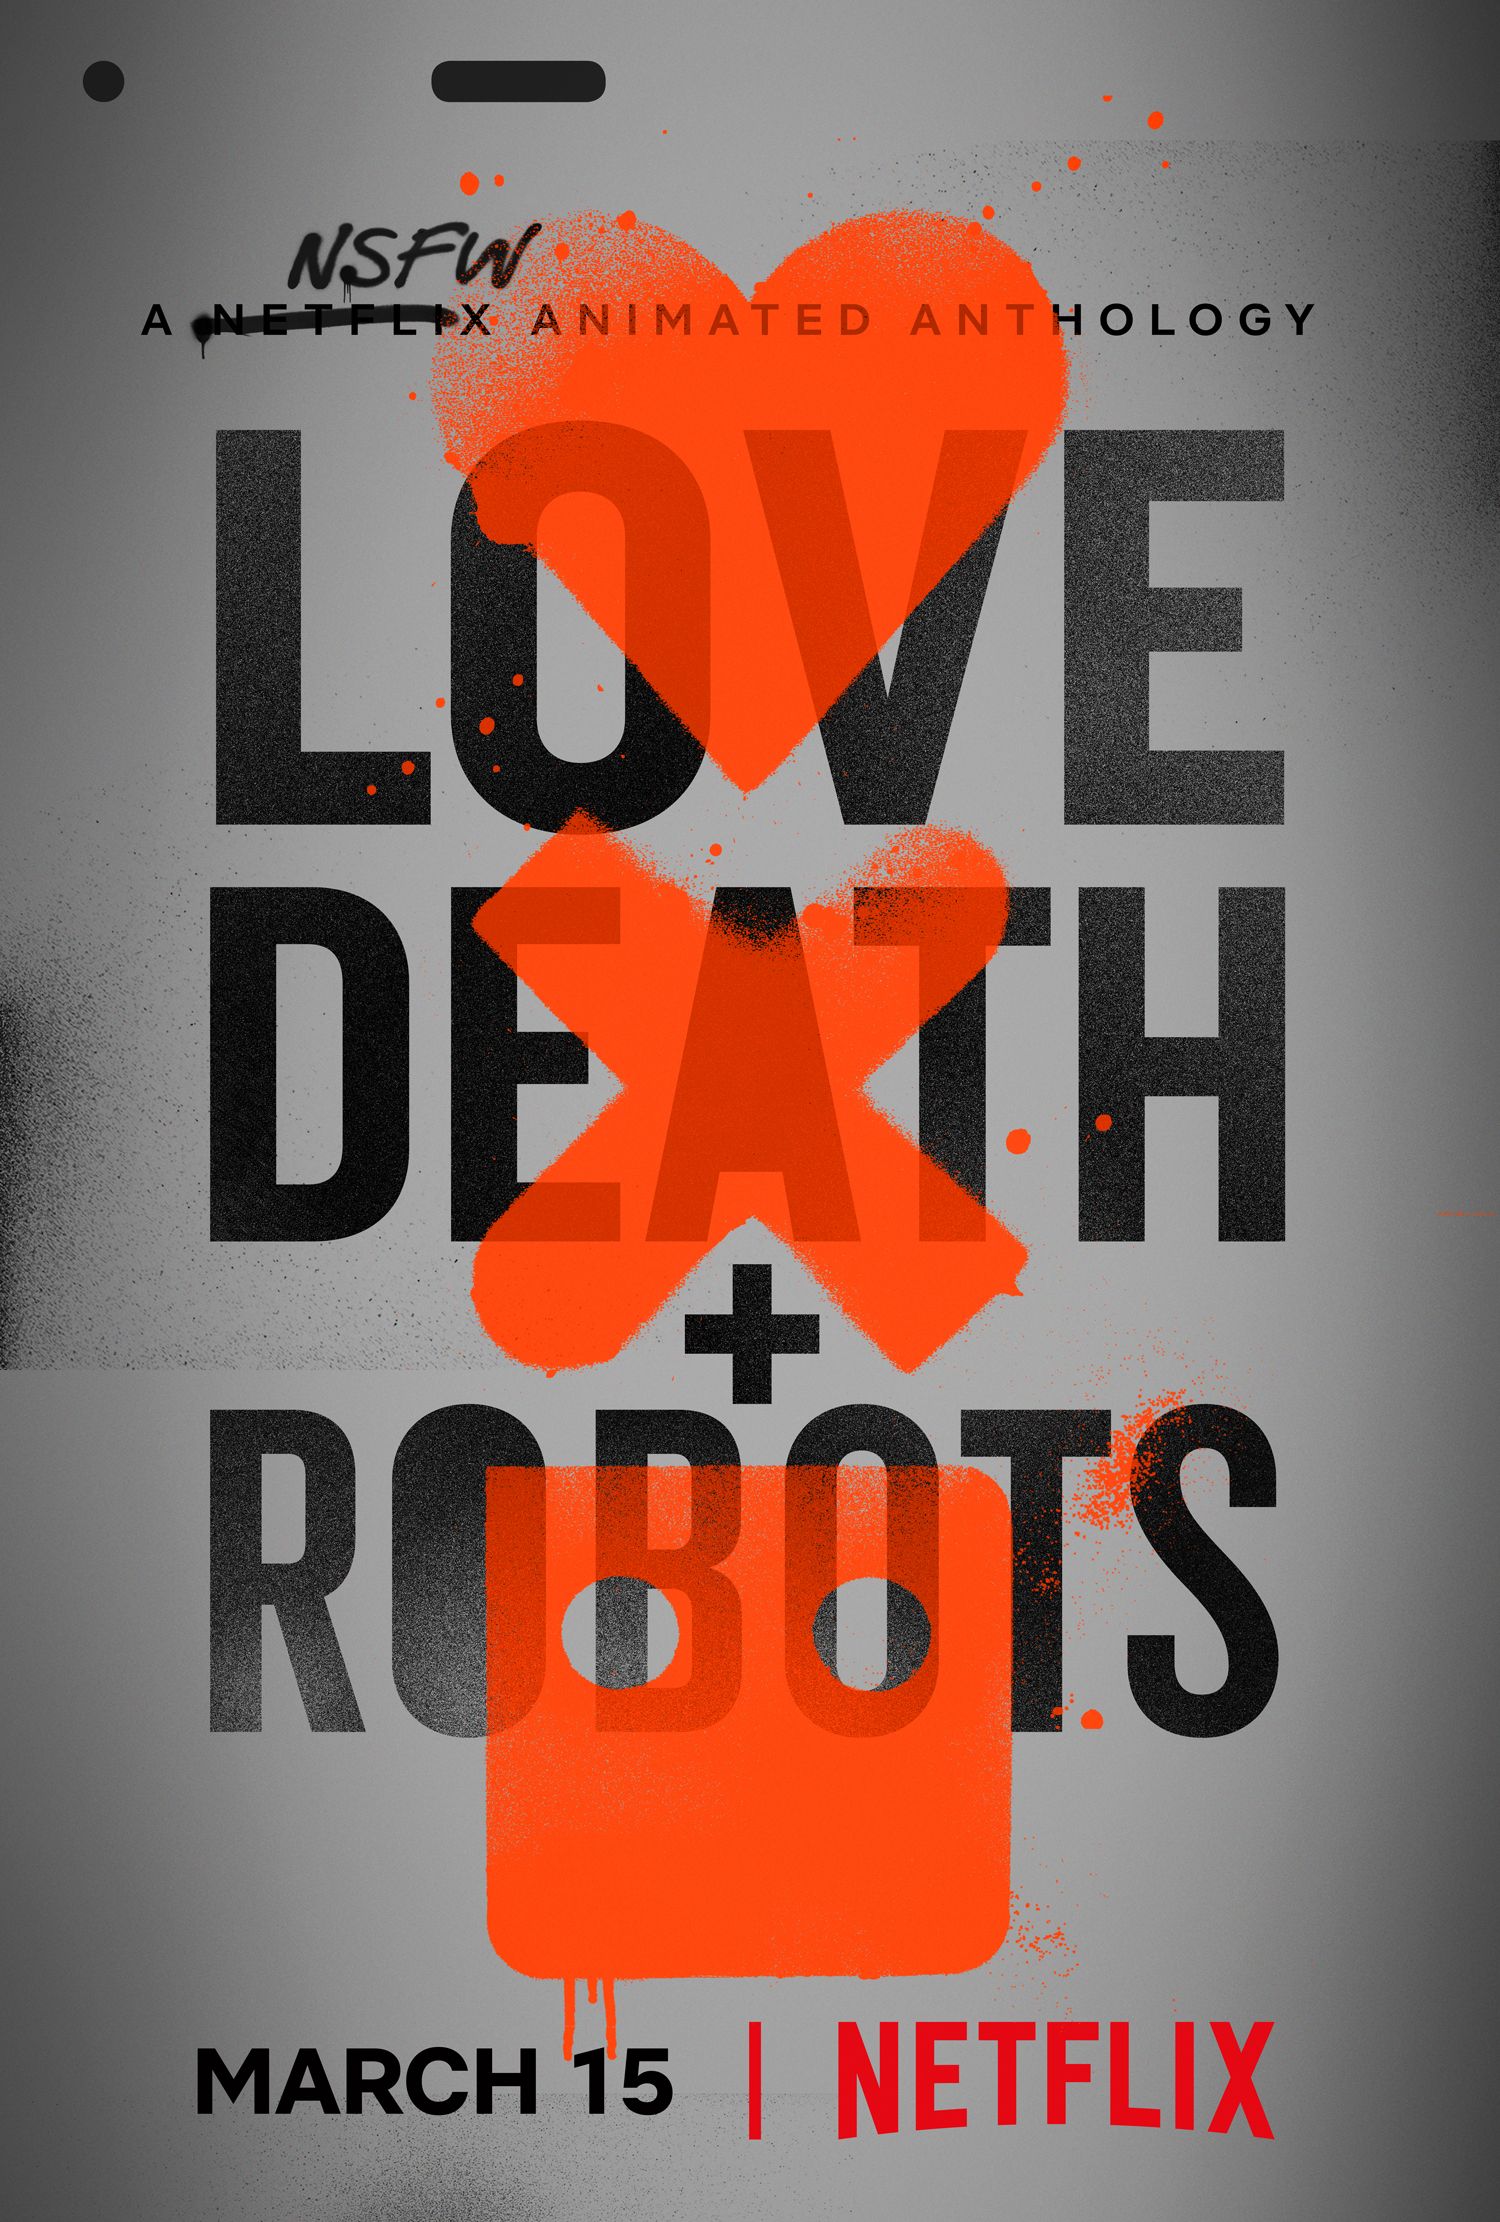 Love, Death & Robots poster